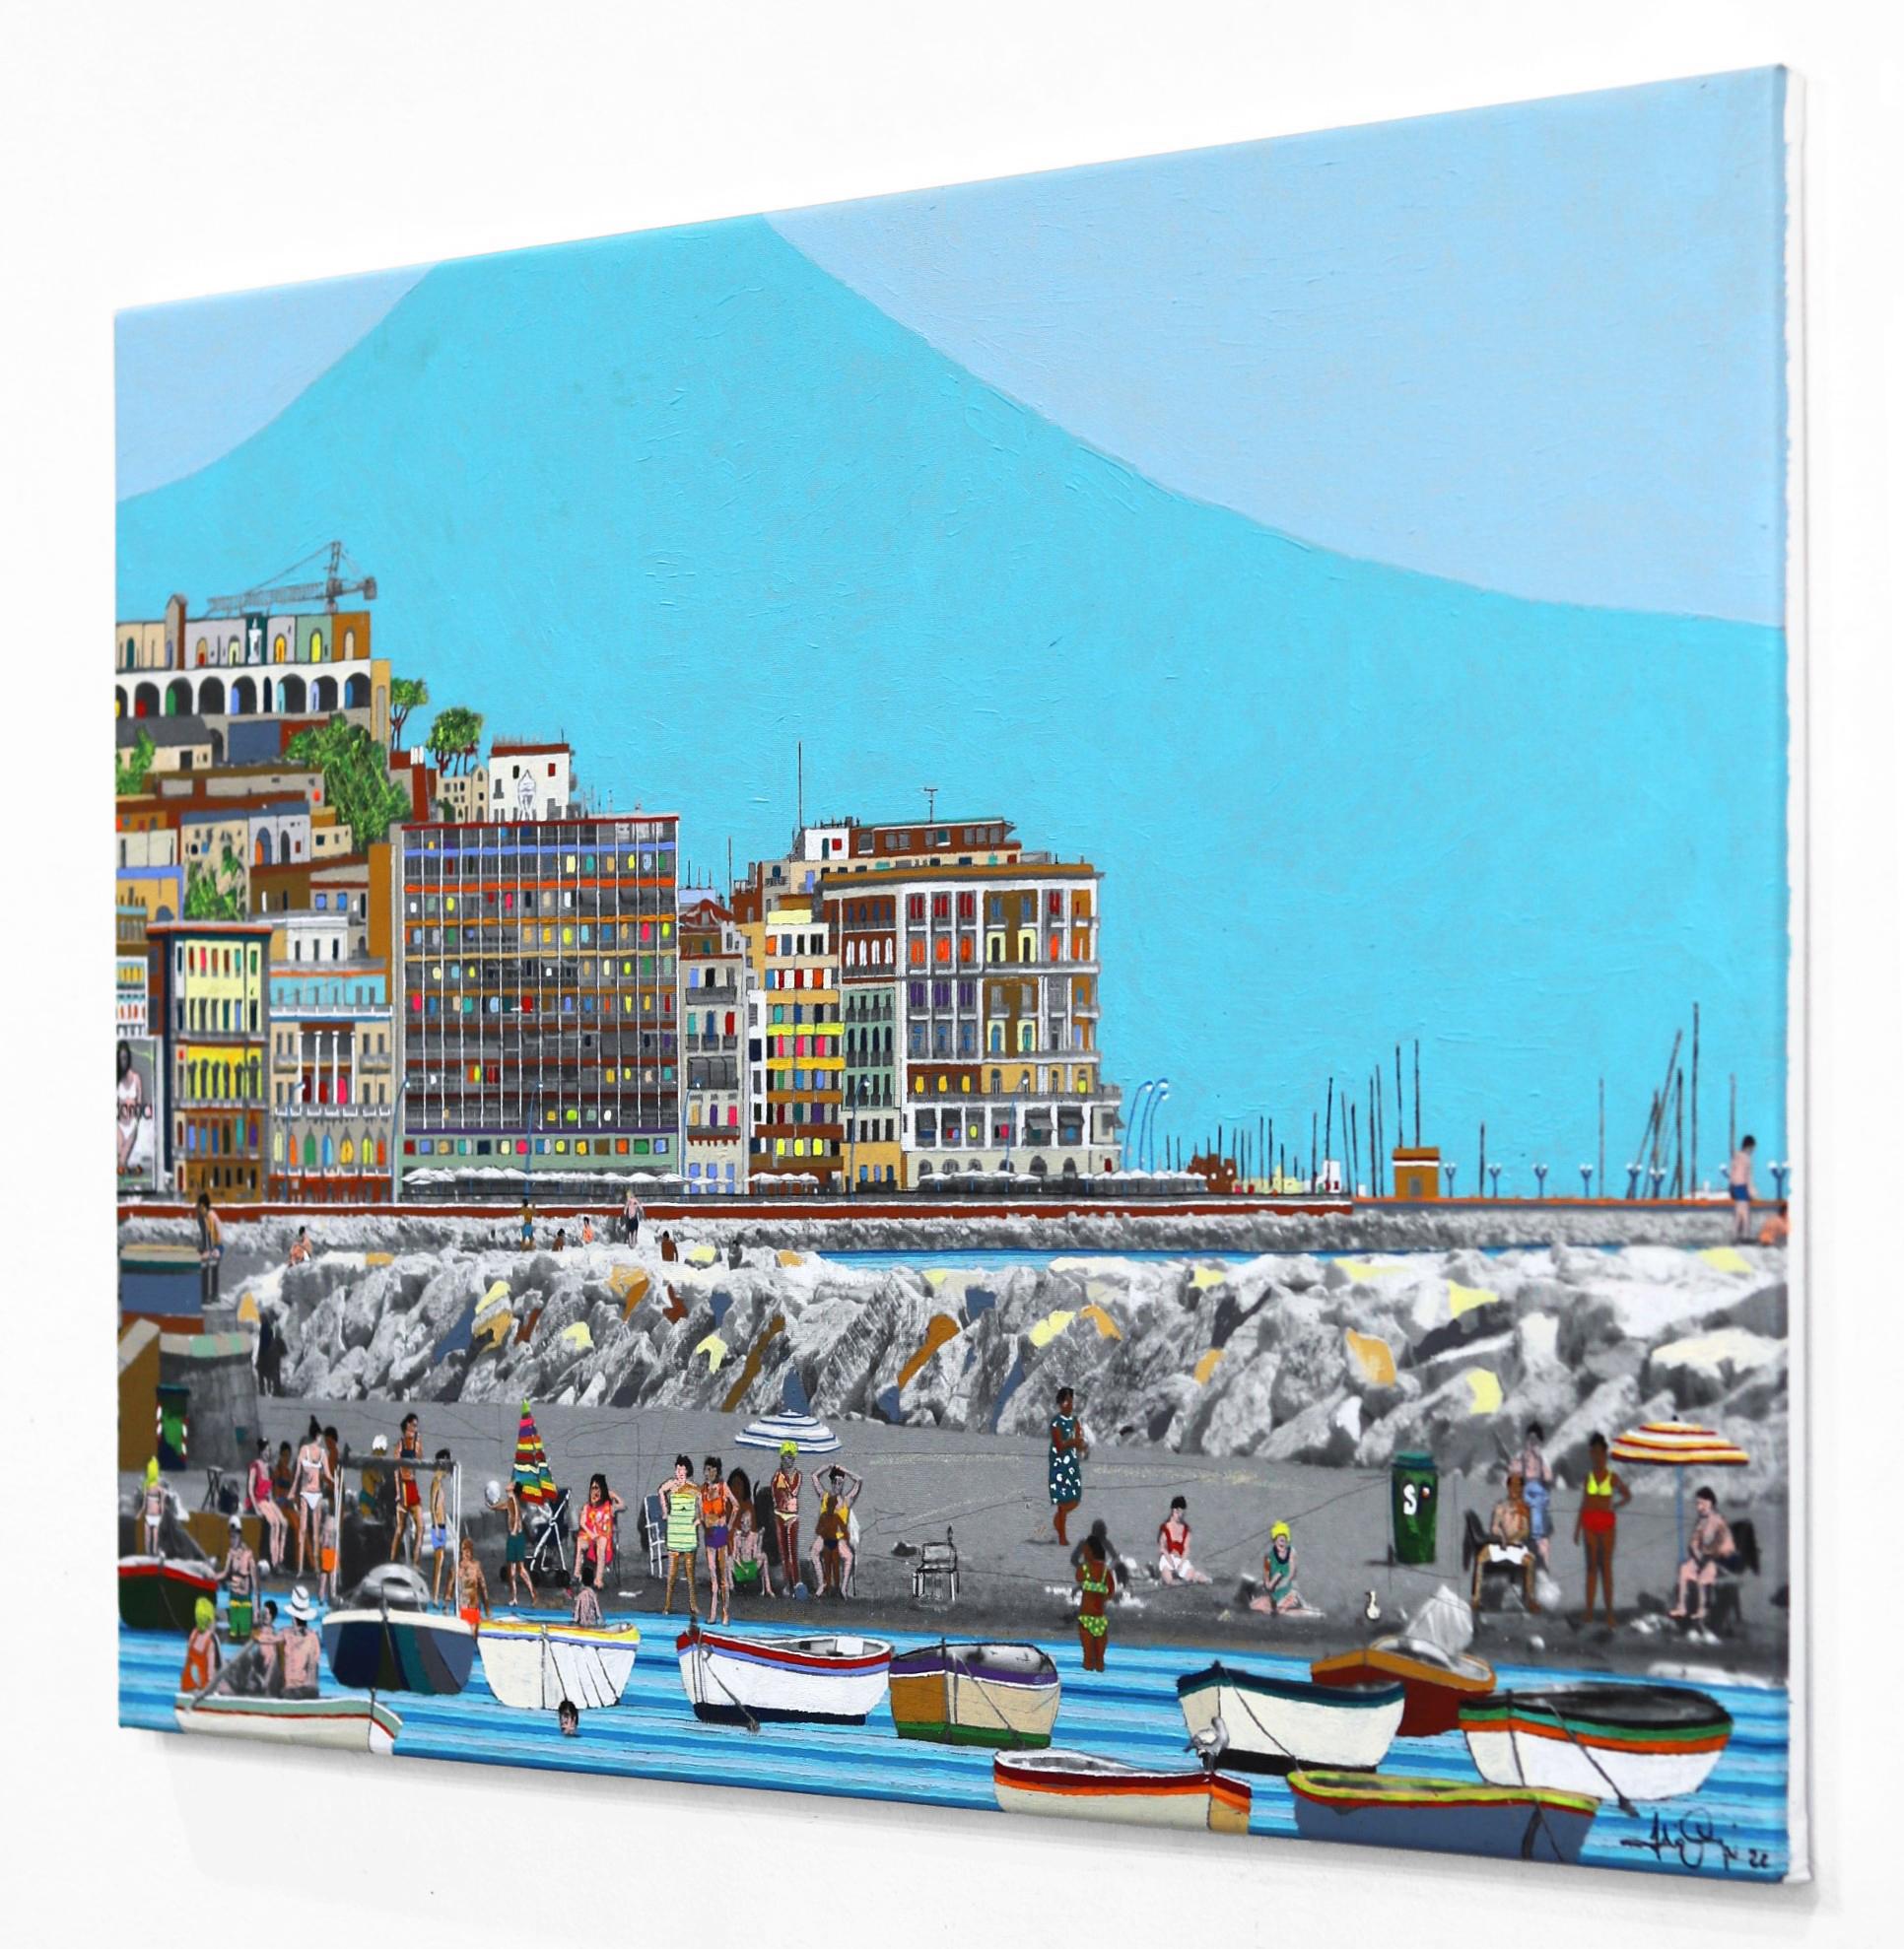 Napoli - Original Landscape Colorful Authentic Environment Painting - Pop Art Mixed Media Art by Fabio Coruzzi